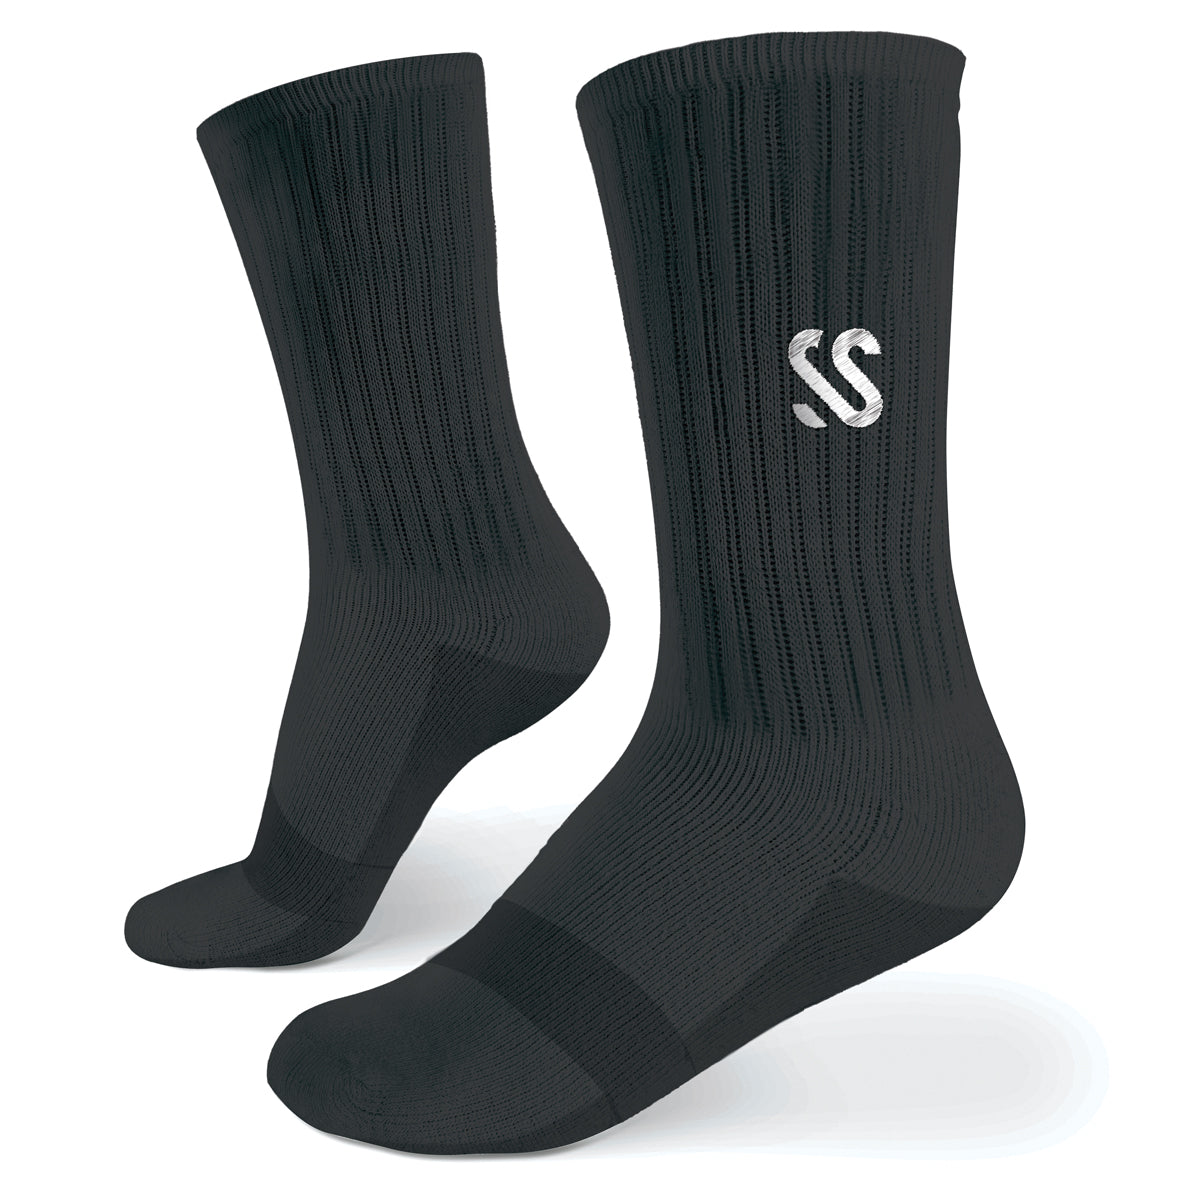 A pair of crew length black socks